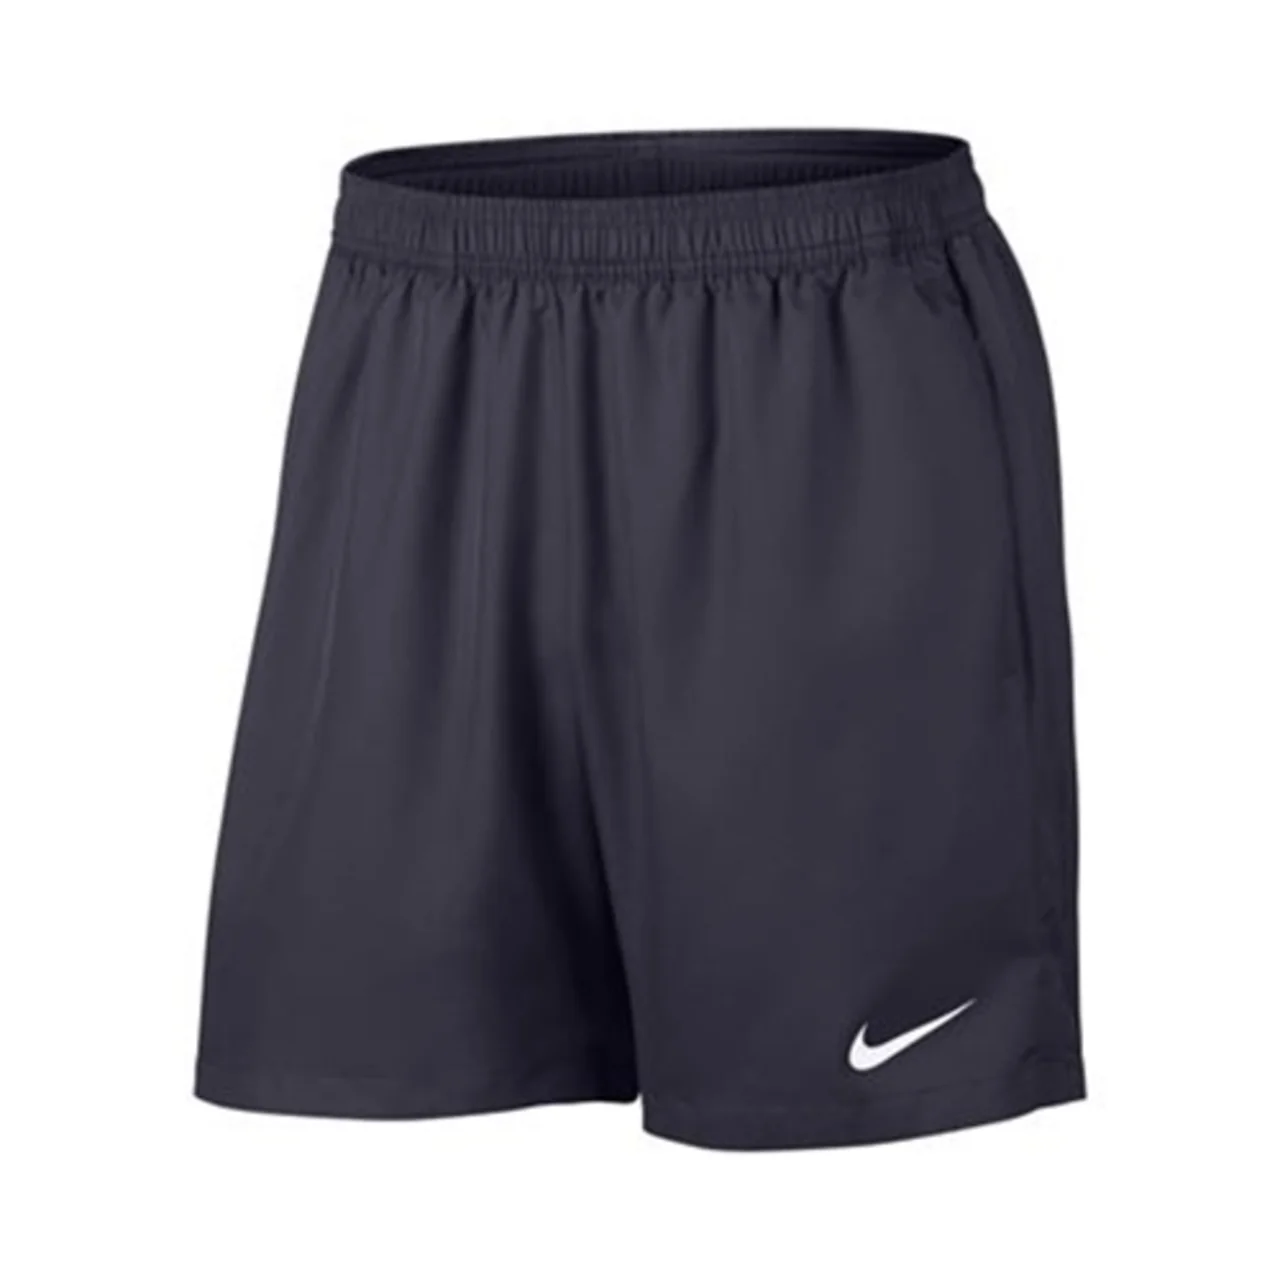 Nike Dry 7'' Shorts Gridiron/Grey